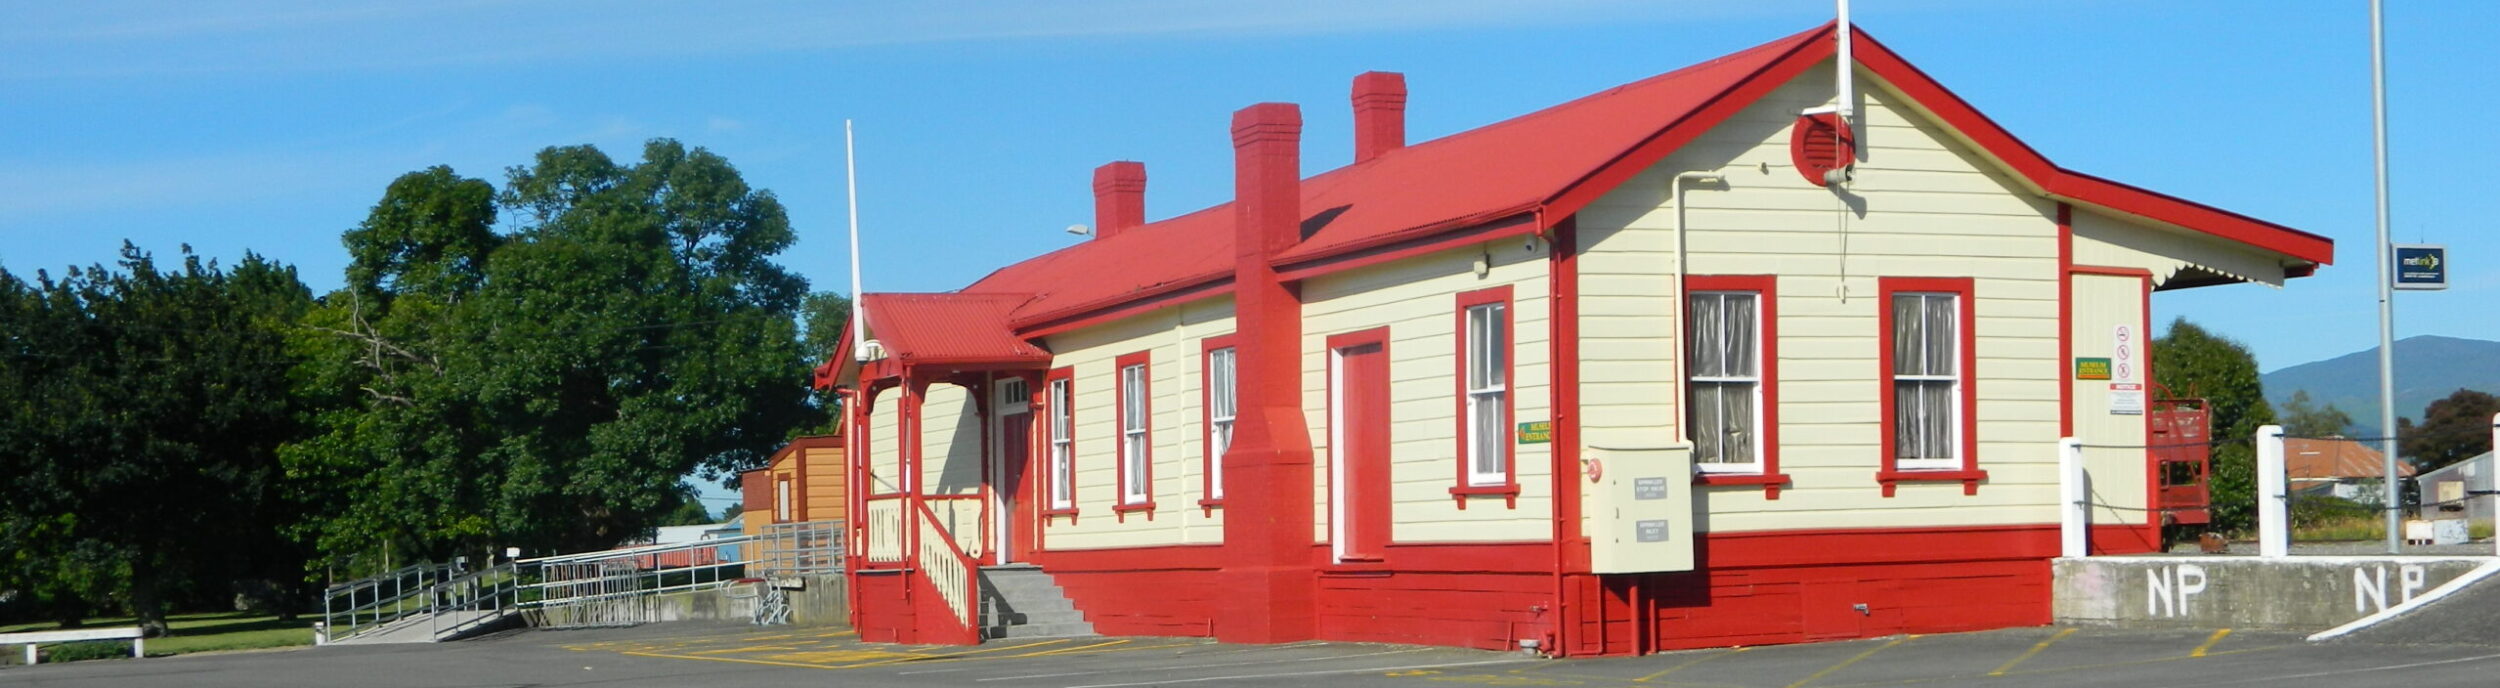 Carterton Railway Museum (Te Whare Rerѐwe o Carterton)